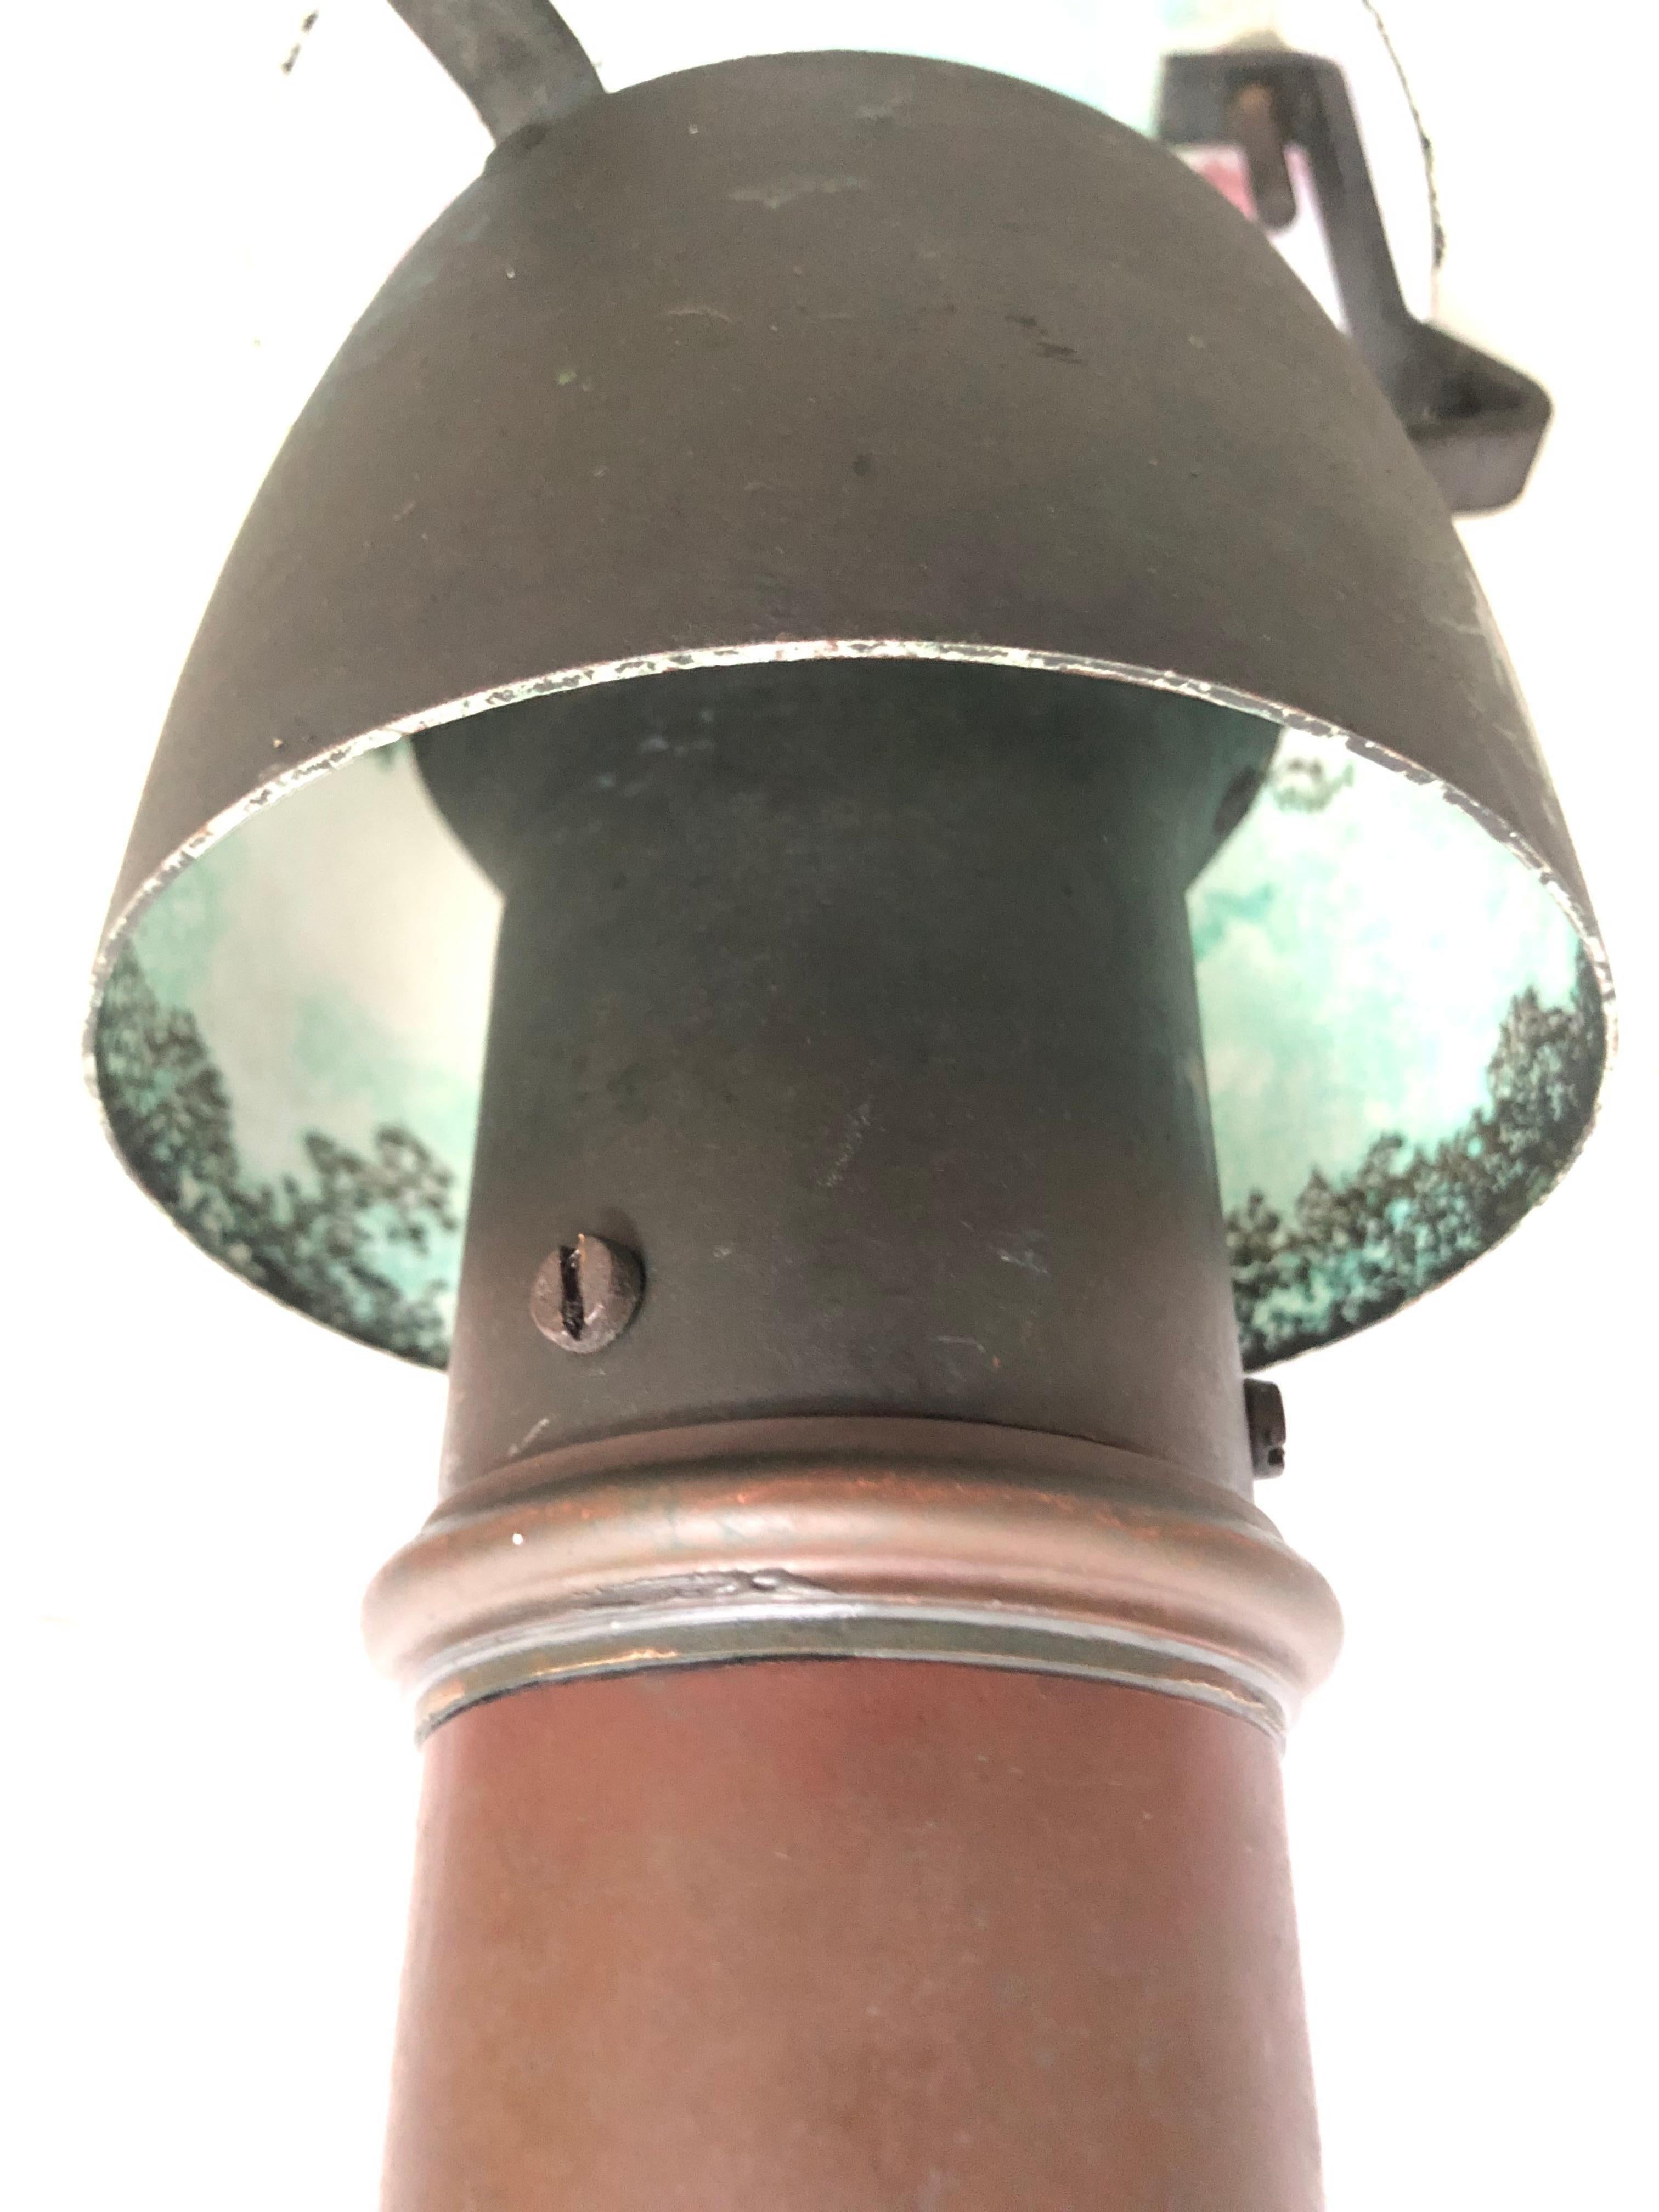 An Iconic Poul Henningsen  Garden Lamp by Louis Poulsen For Sale 4